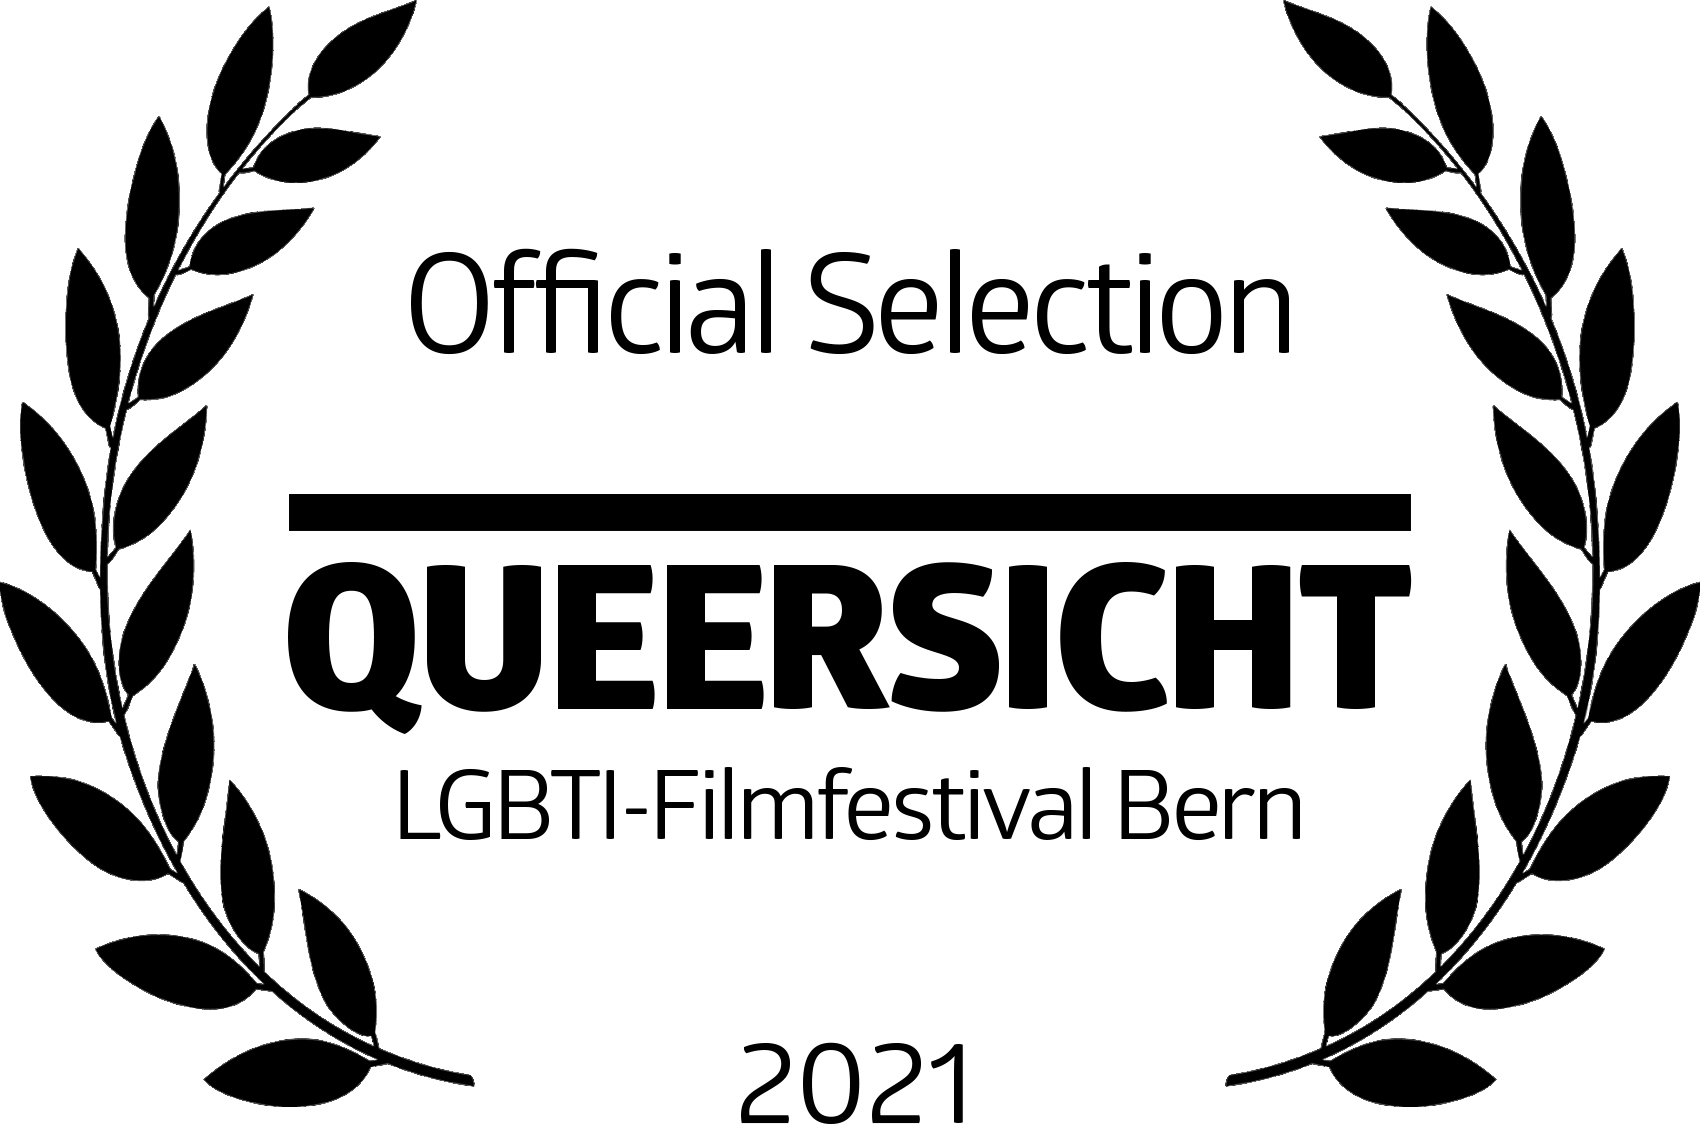 Queersicht Film Festival Bern